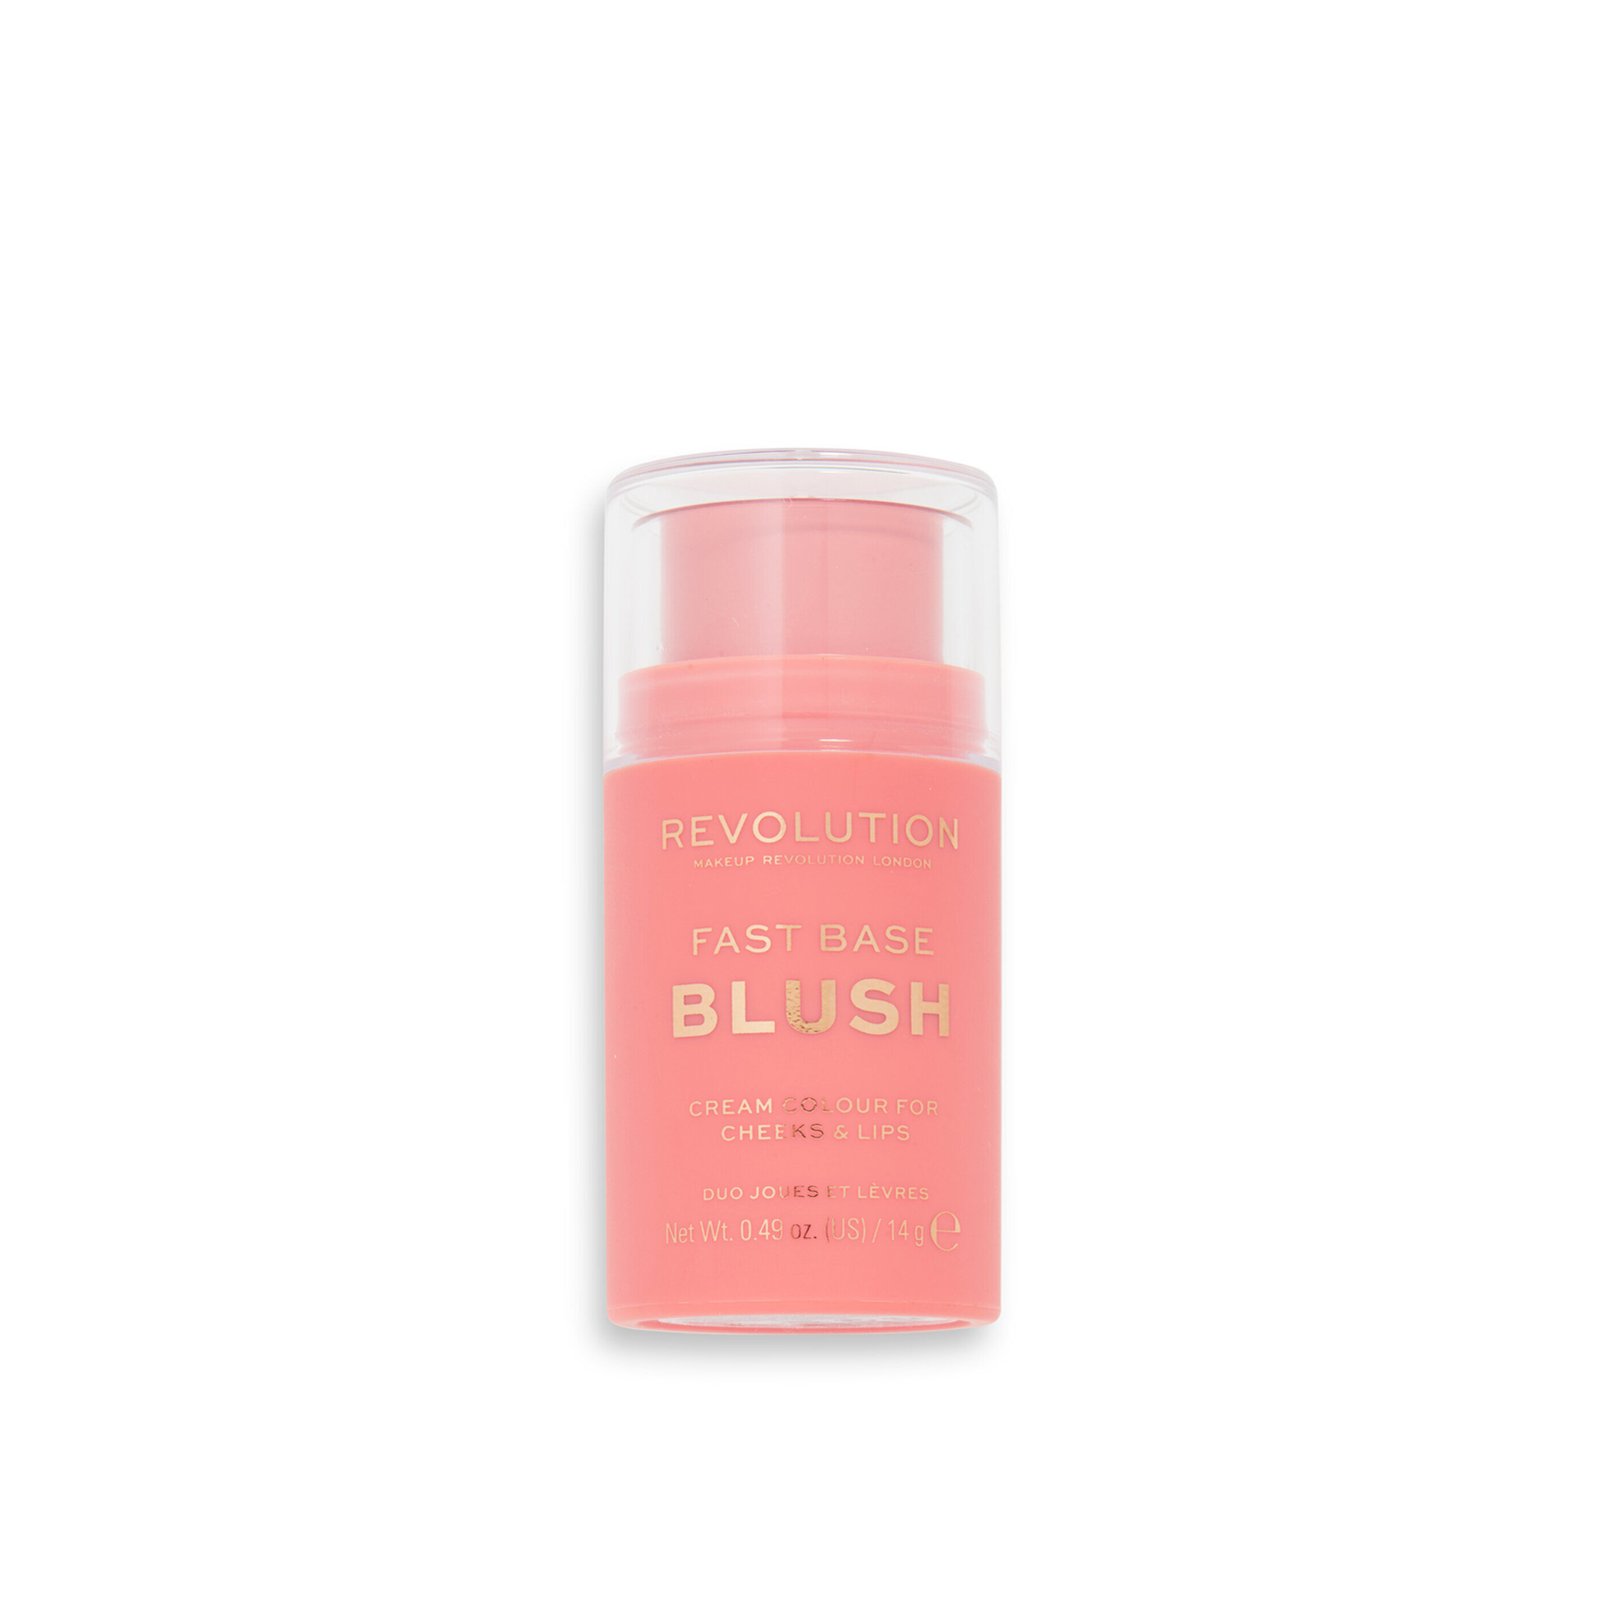 Makeup Revolution Fast Base Blush Stick Peach 14g (0.49 oz)